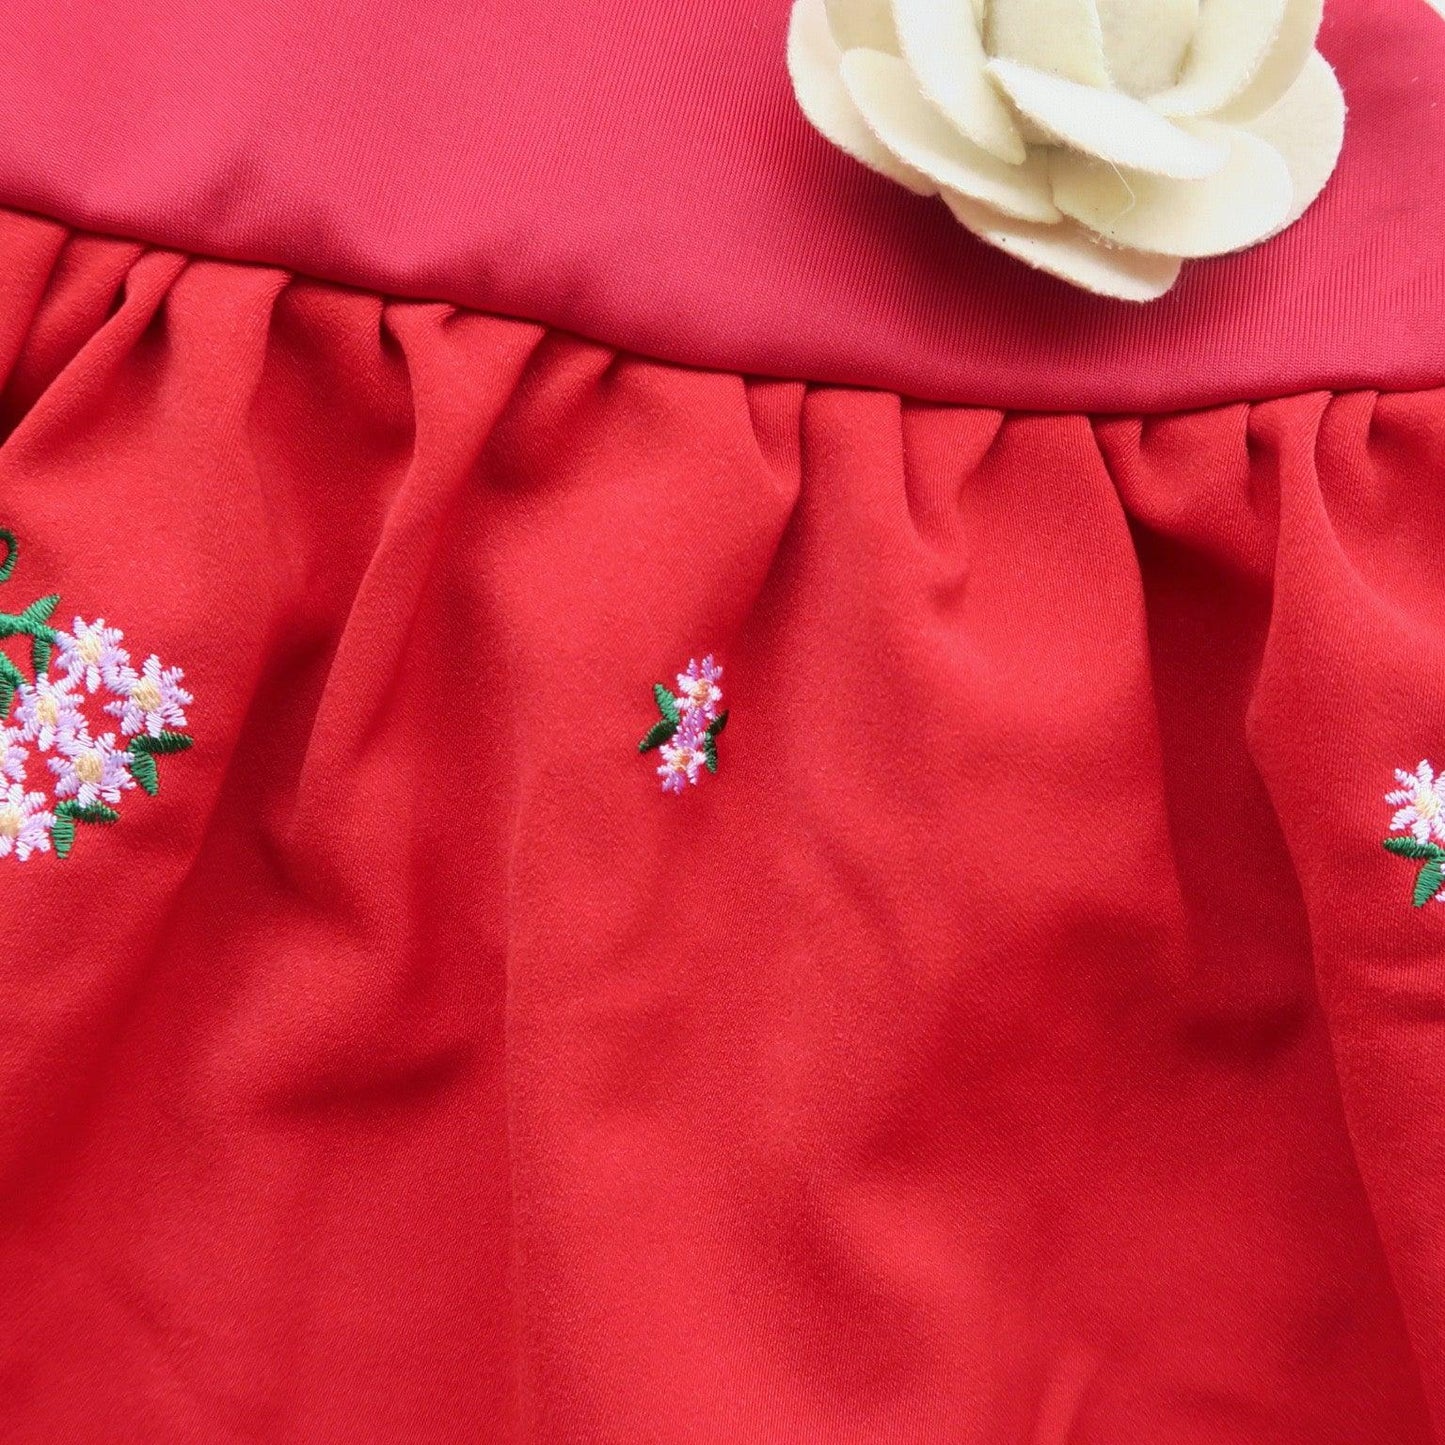 Iris Dress in Red Floral Embroidery - Lil' Tati